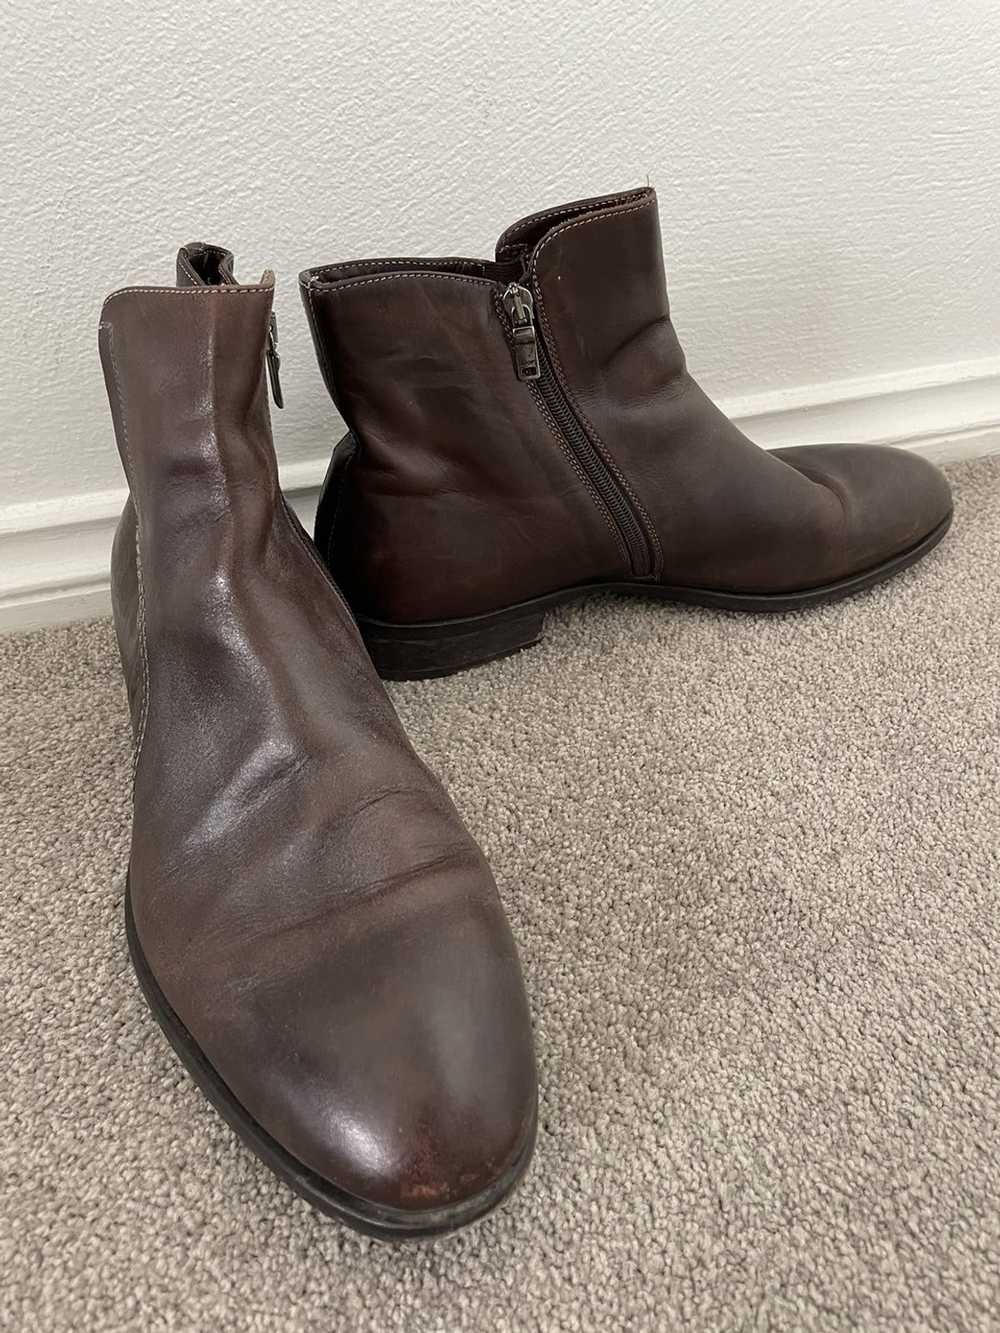 Joop! Joop brown leather side zip boots size 44 - image 4